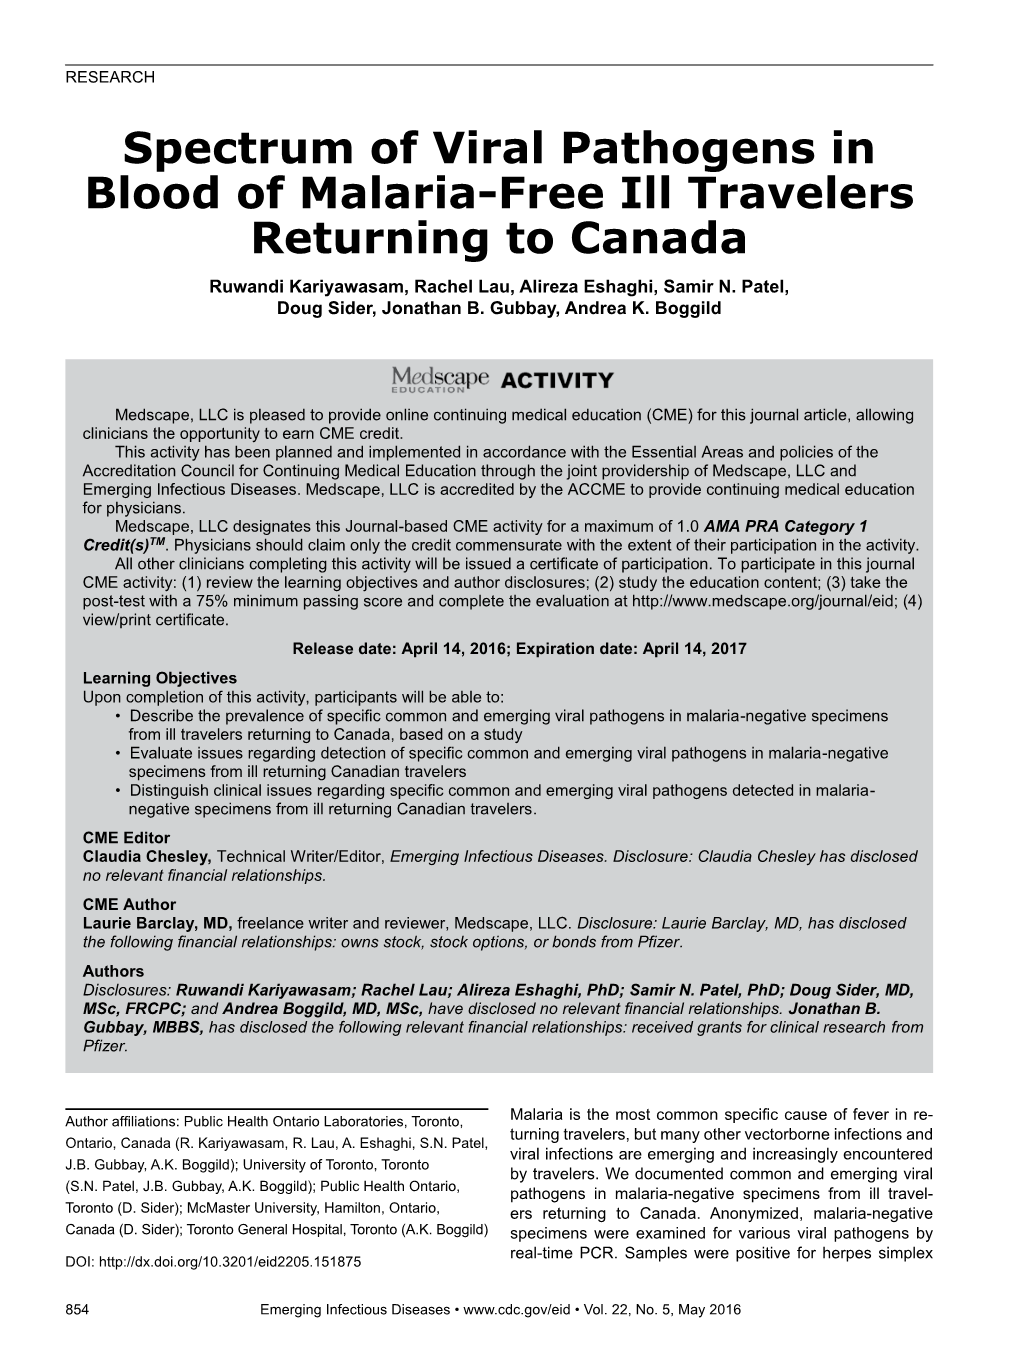 Spectrum of Viral Pathogens in Blood of Malaria-Free Ill Travelers Returning to Canada Ruwandi Kariyawasam, Rachel Lau, Alireza Eshaghi, Samir N